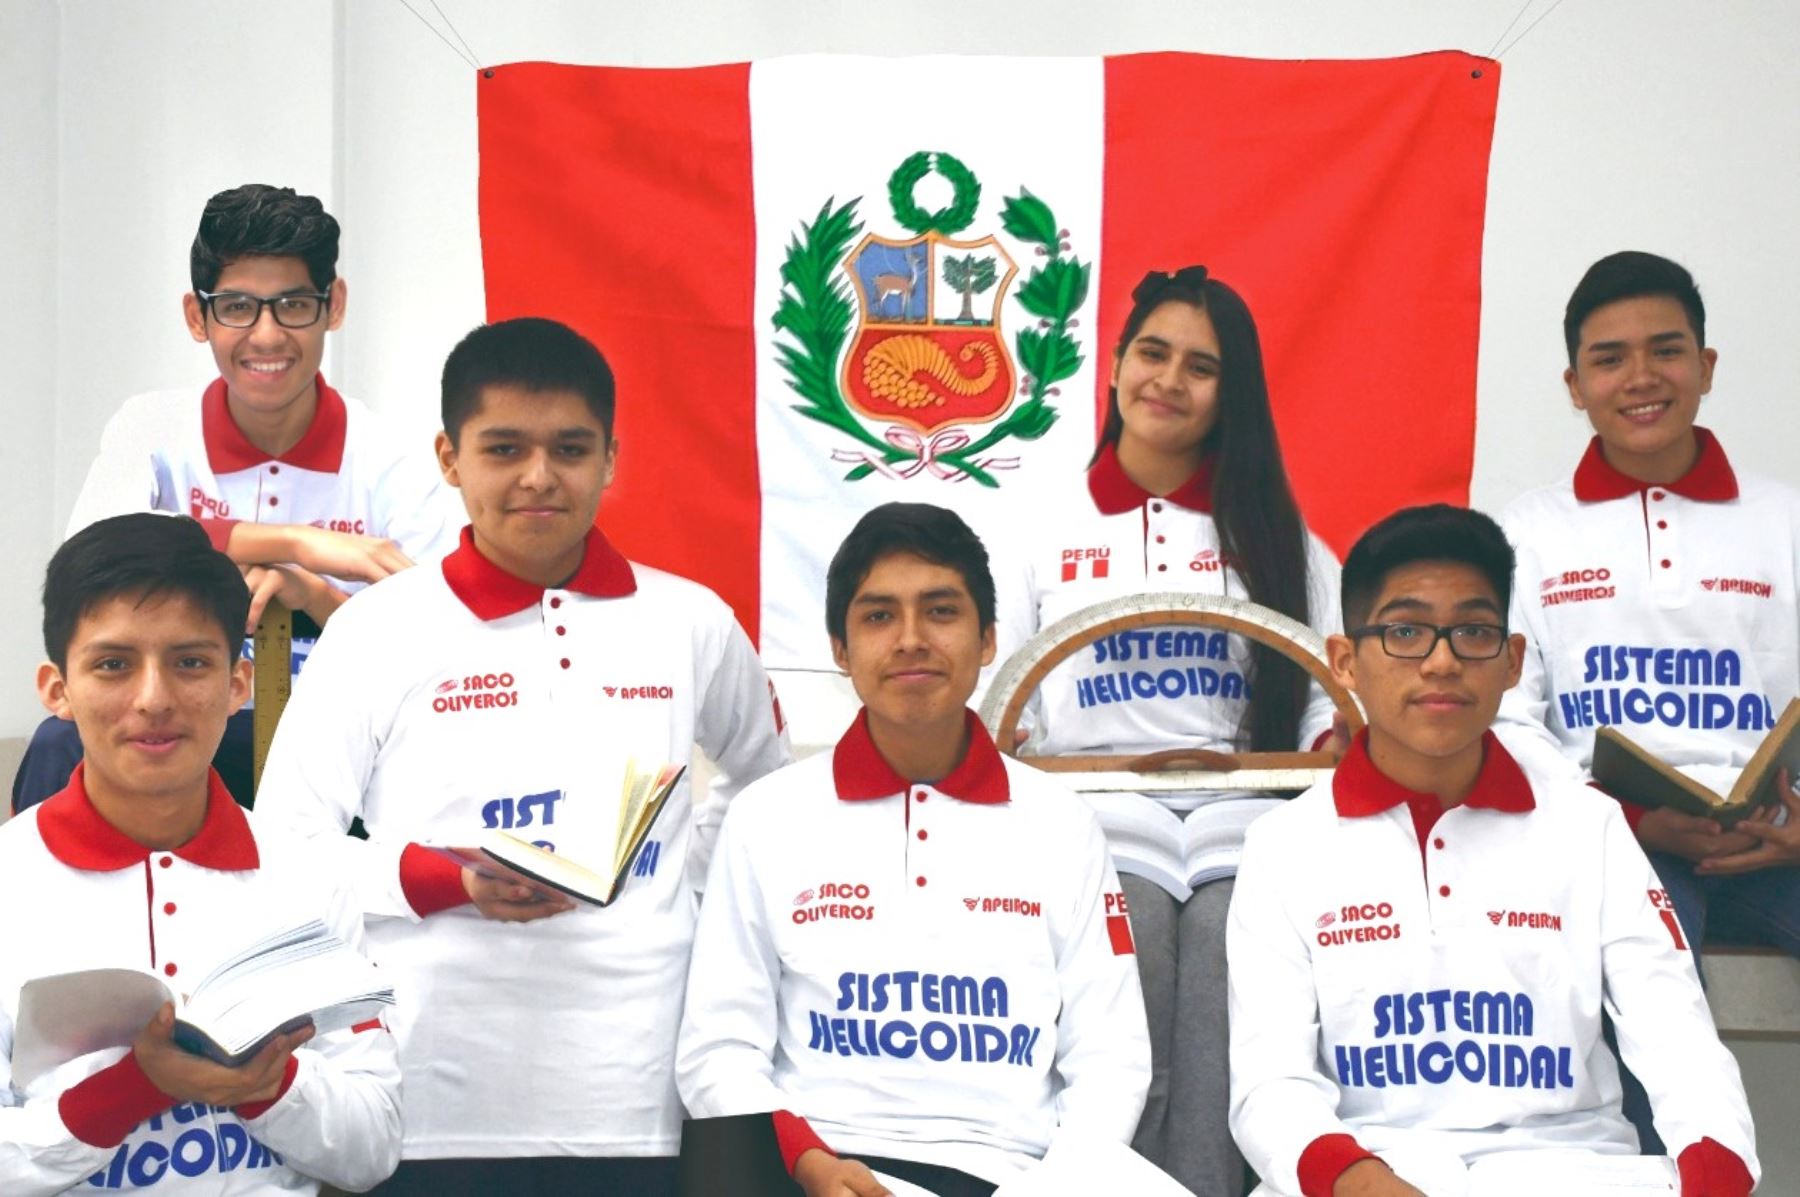 Estudiantes peruanos competirán en mundial de ciencias en Rusia. Foto: ANDINA/Difusión.